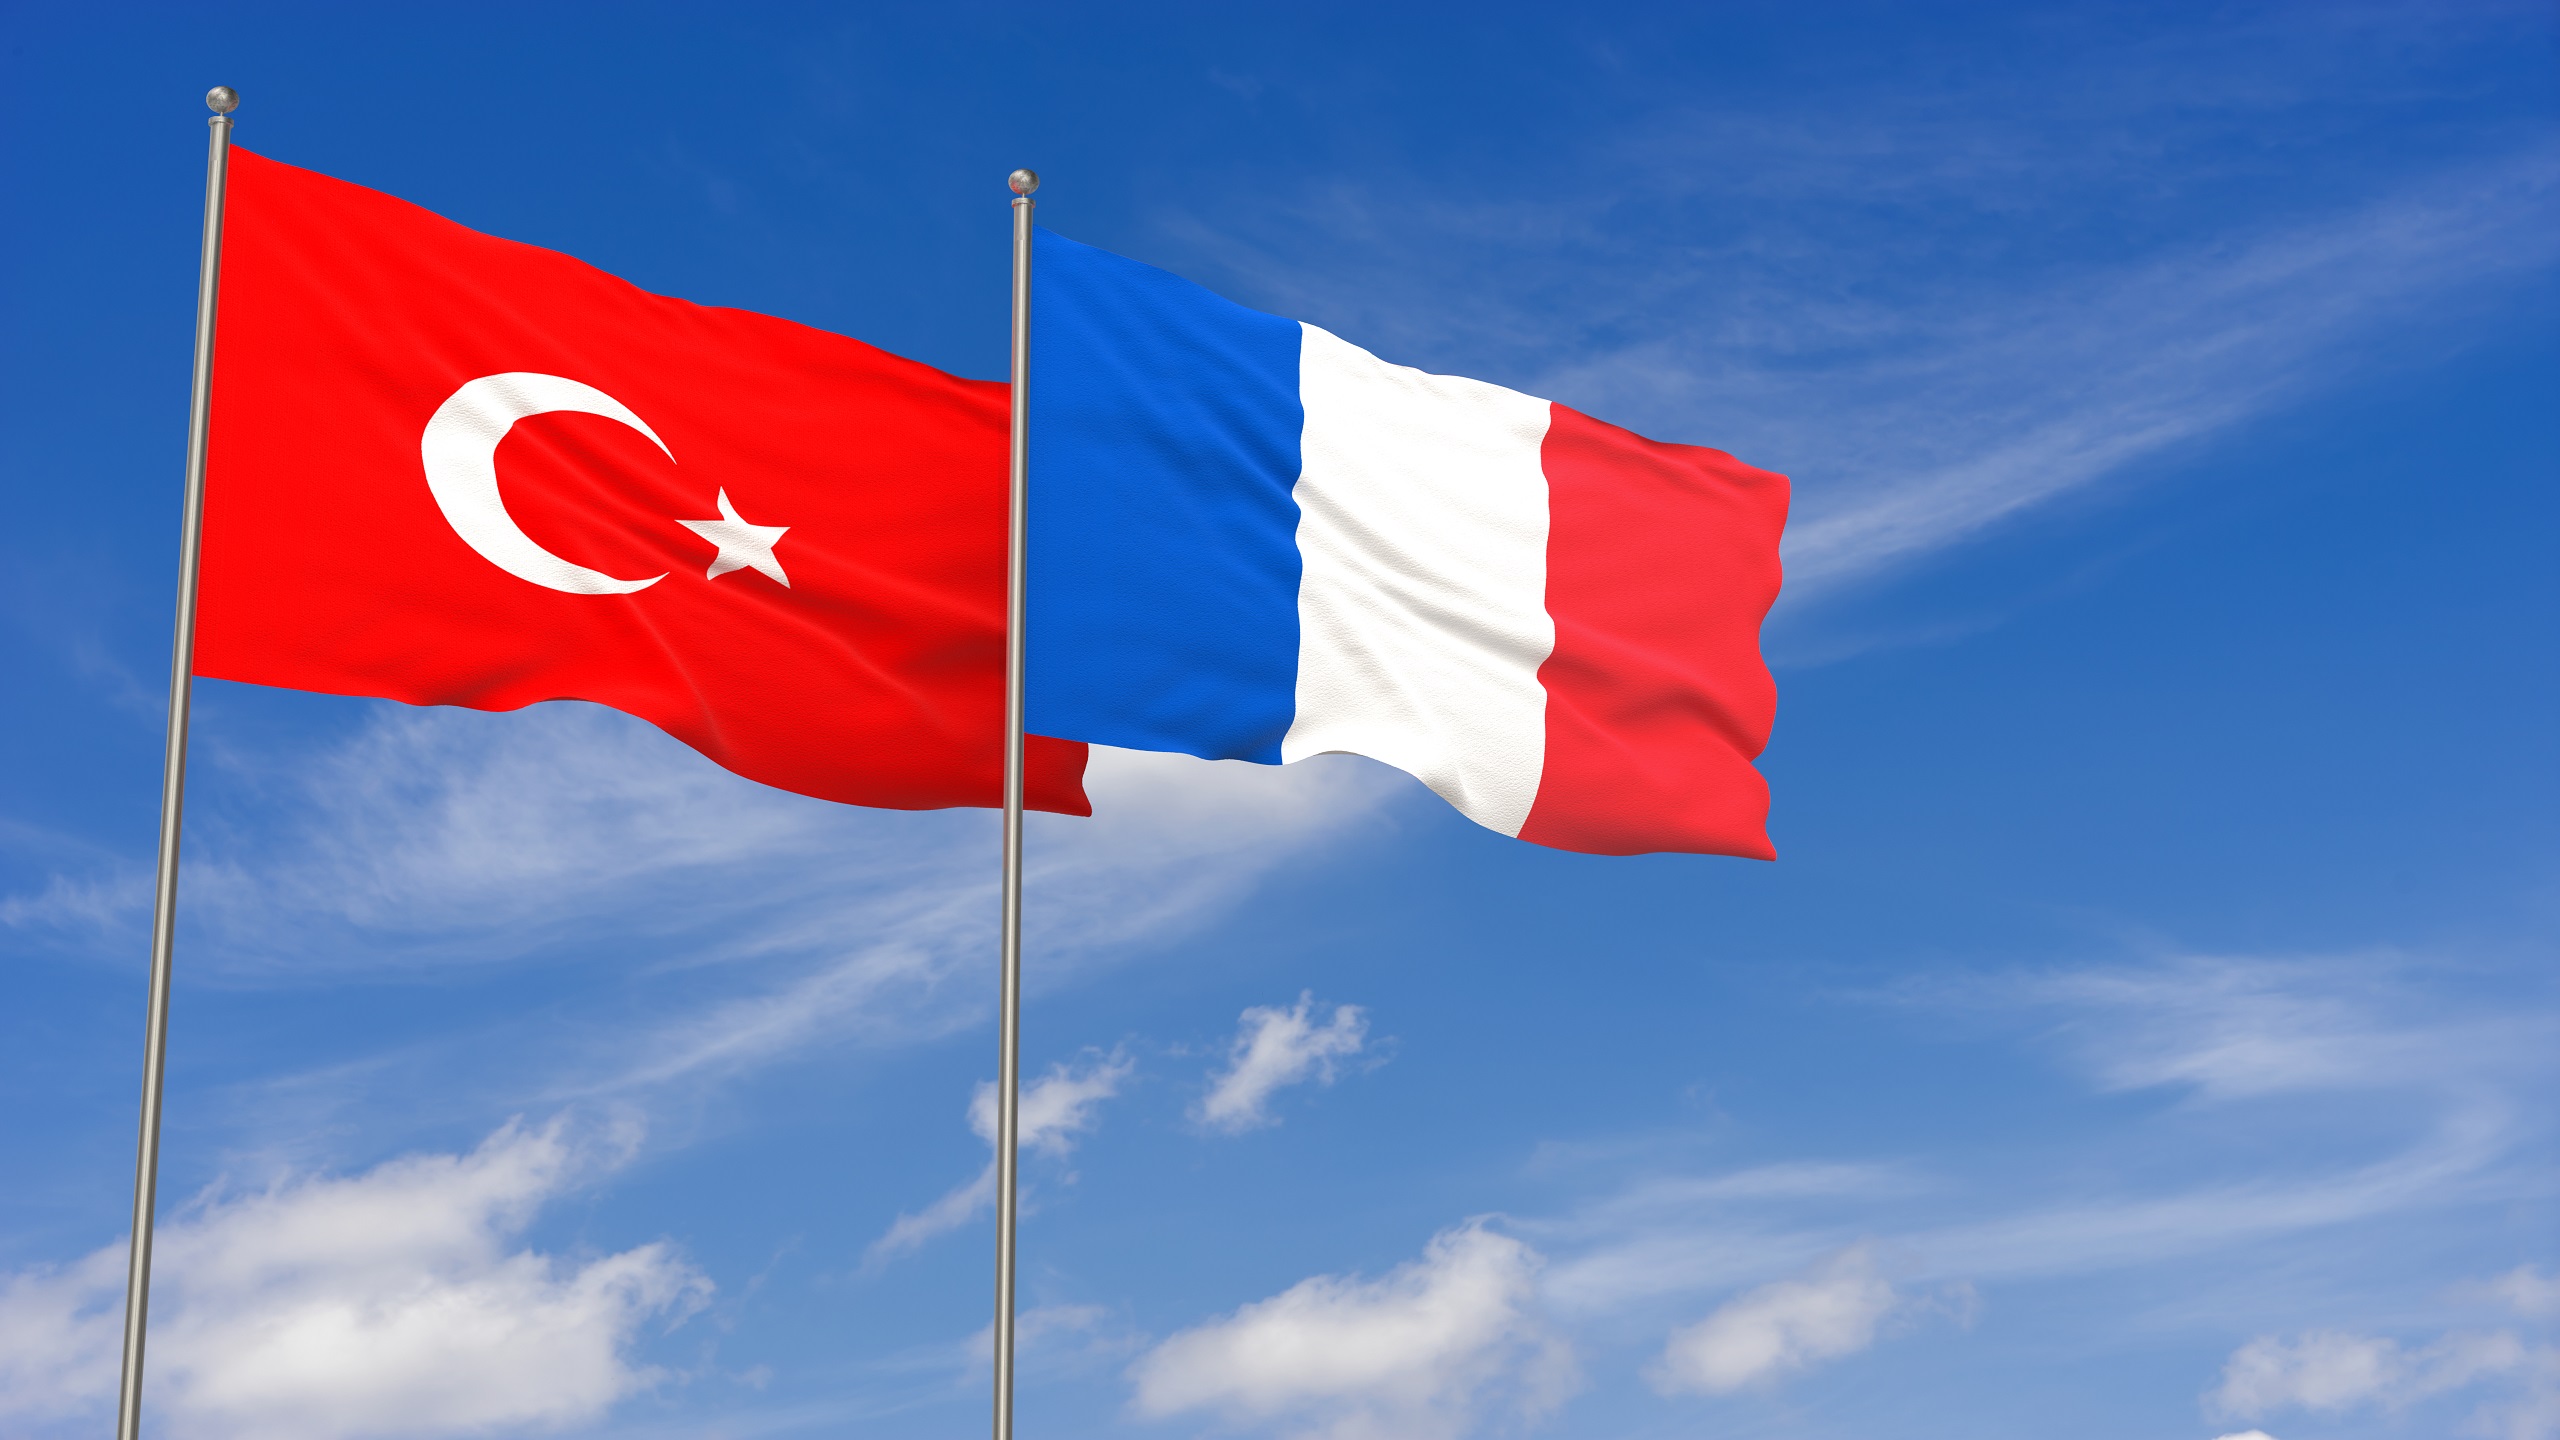 Turkey Summons French Ambassador Over Recognition of Kurdish Groups